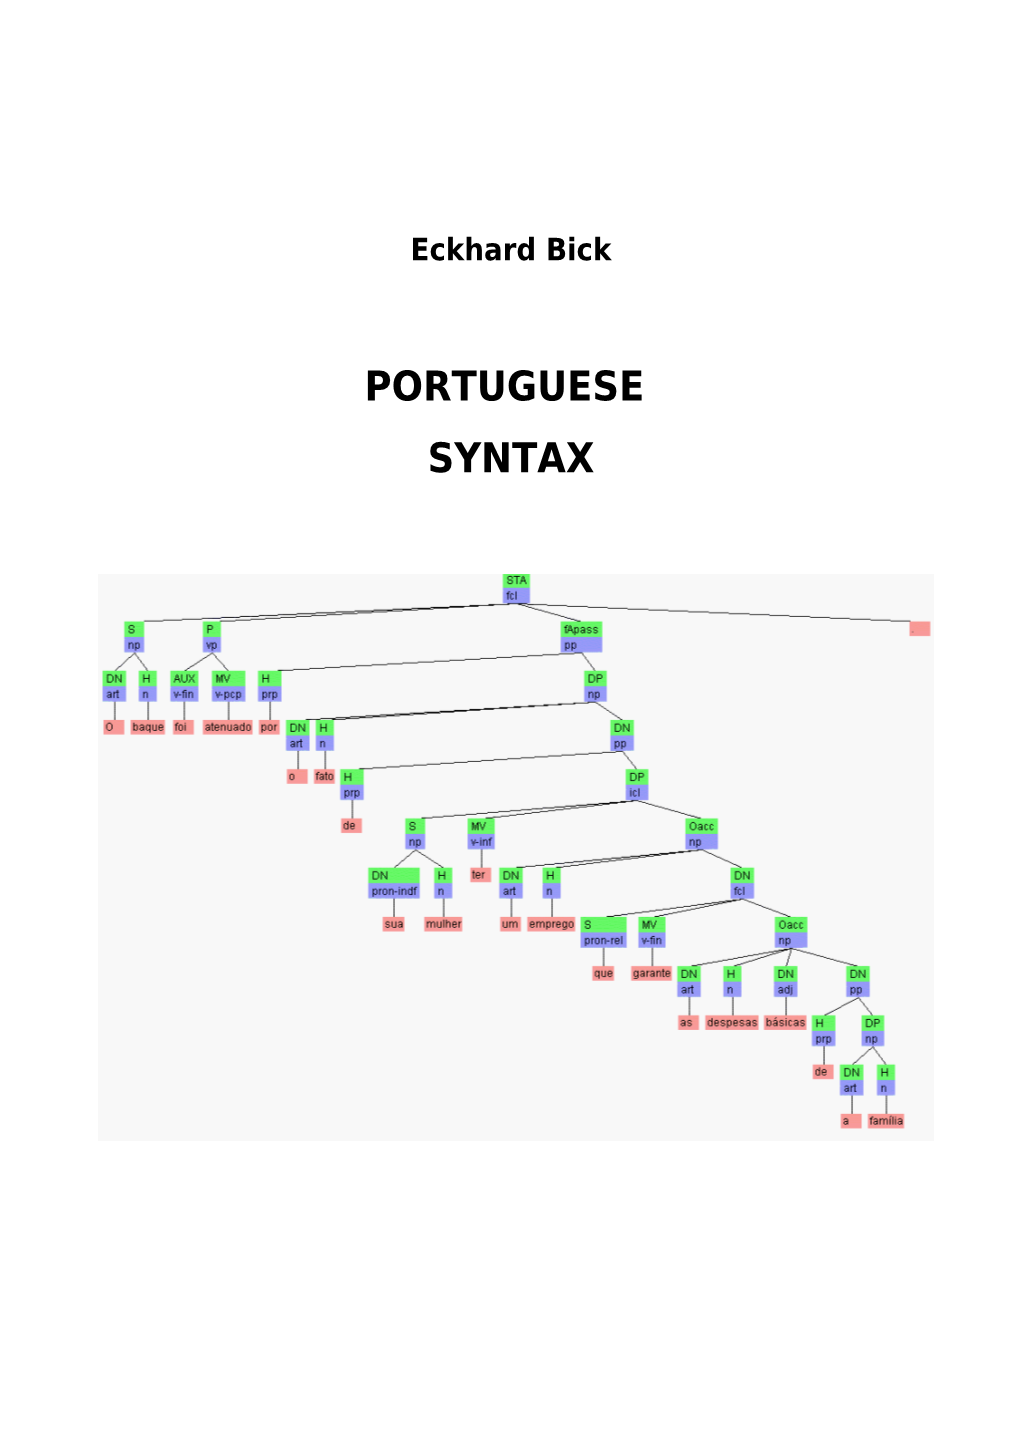 Eckhard Bick, Portuguese Syntax